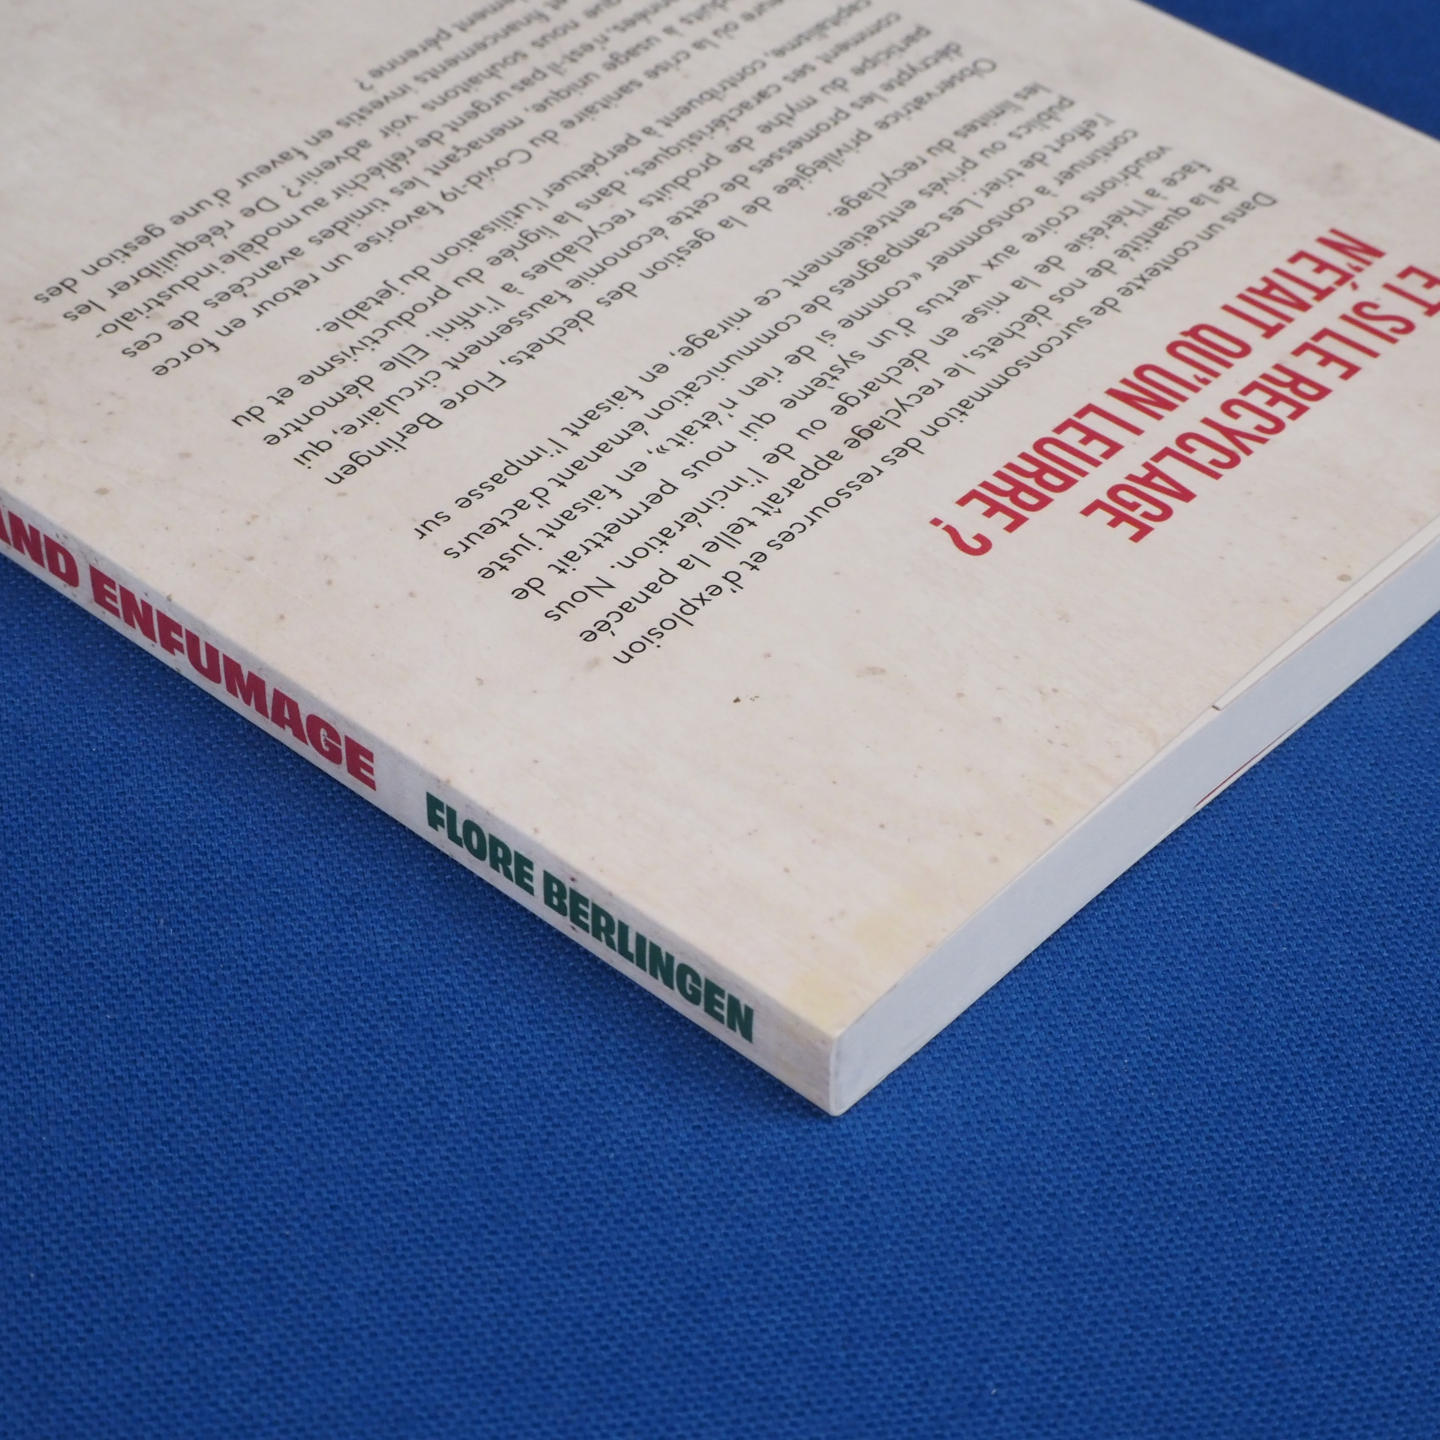 Book 'Recyclage: le grand enfumage' by Flore Berlingen